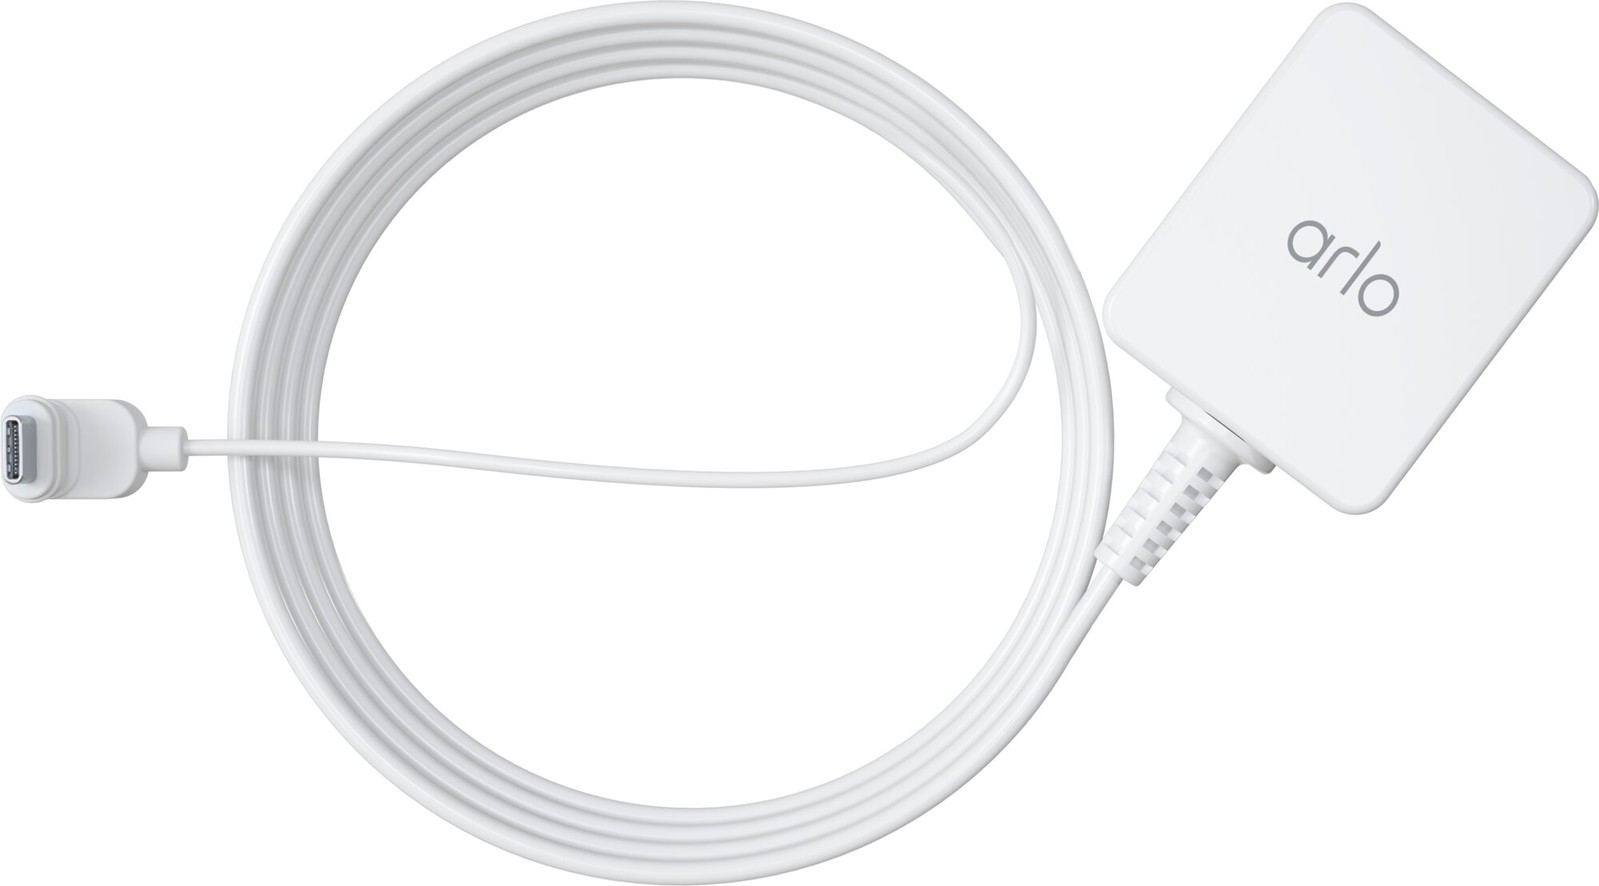 Arlo Essential (Gen.2), nabíjecí kabel, bílá - VMA5700-100PES